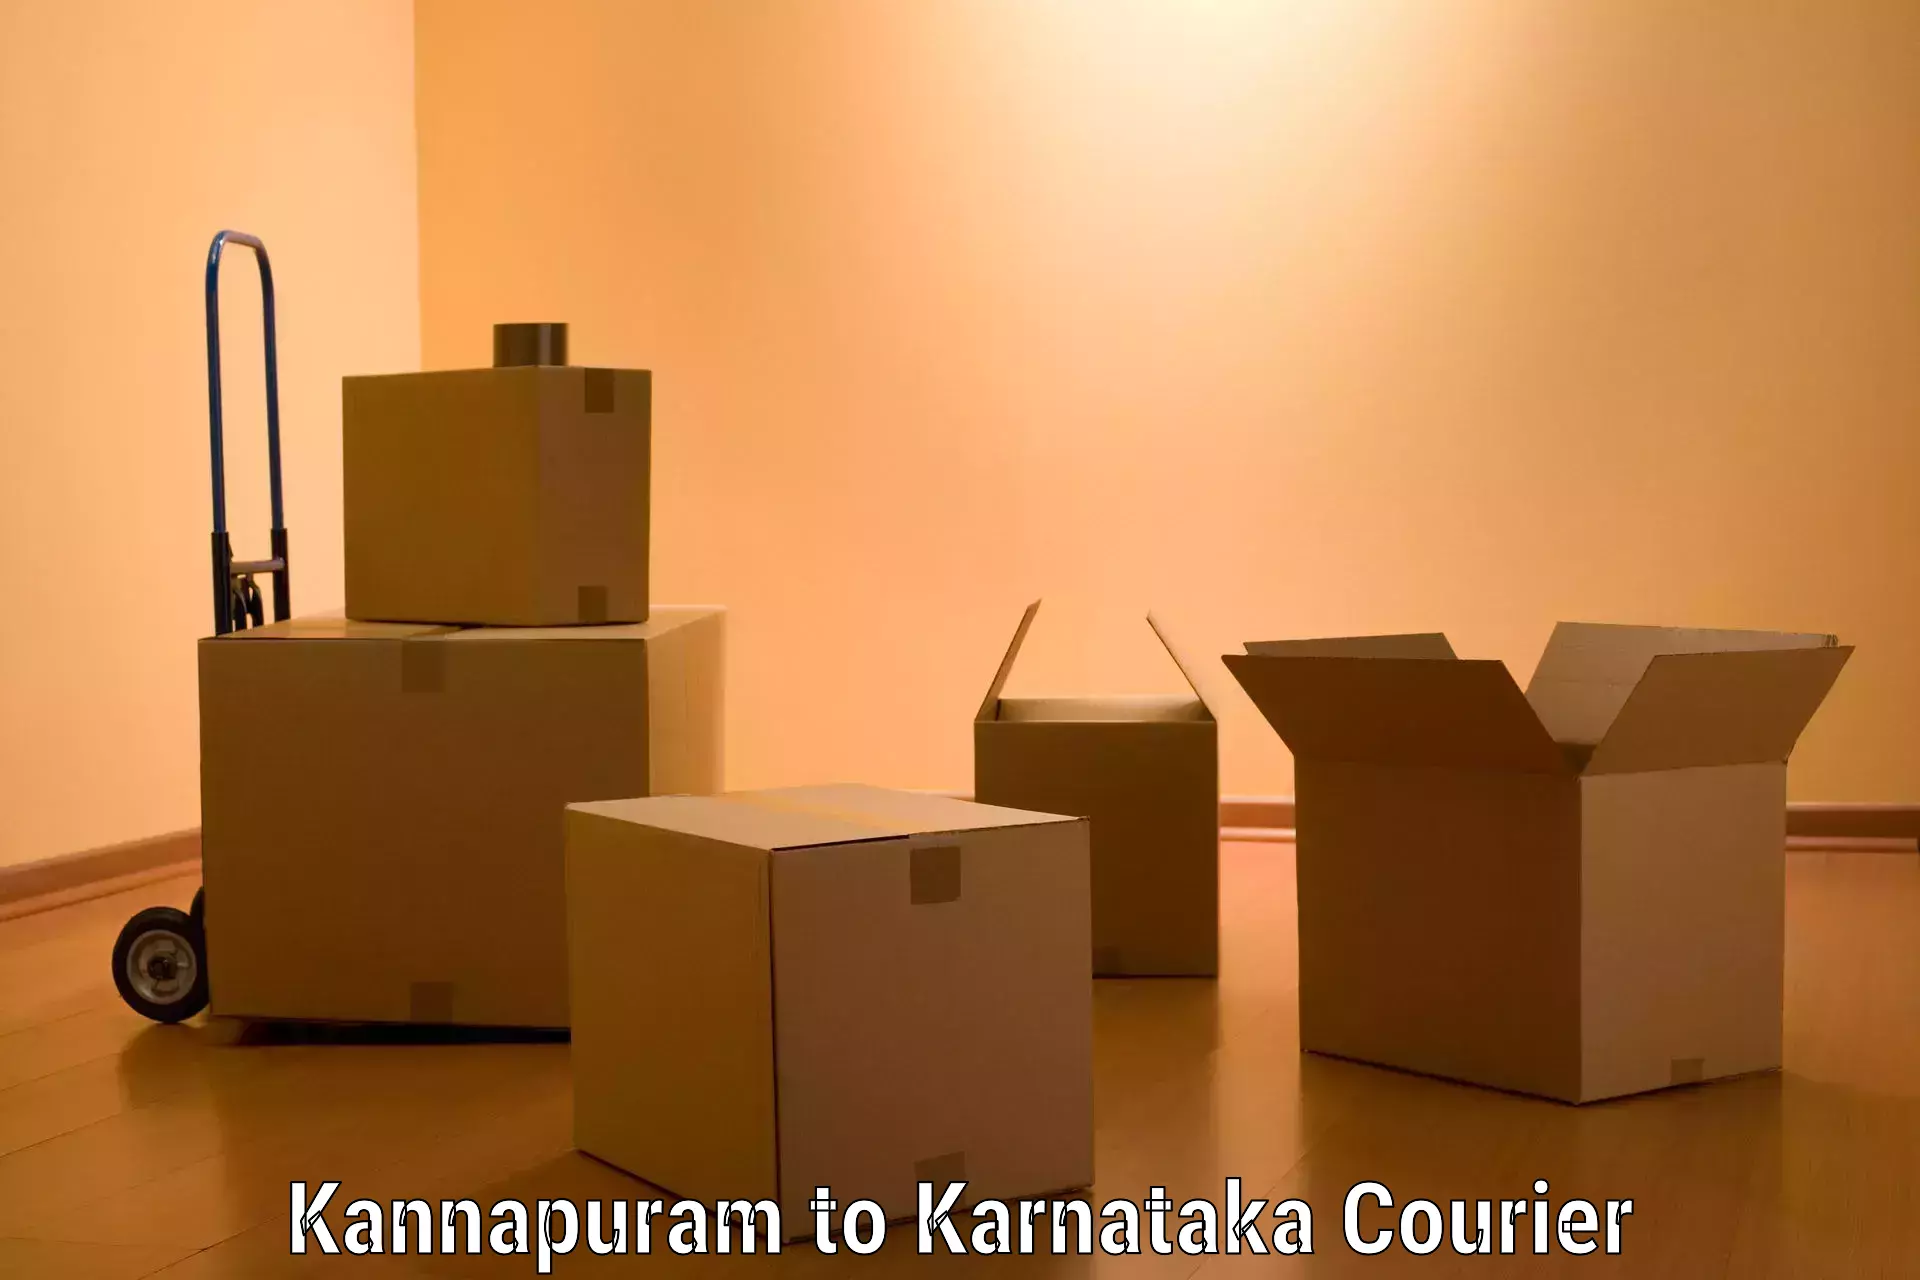 Furniture relocation experts Kannapuram to Kolar